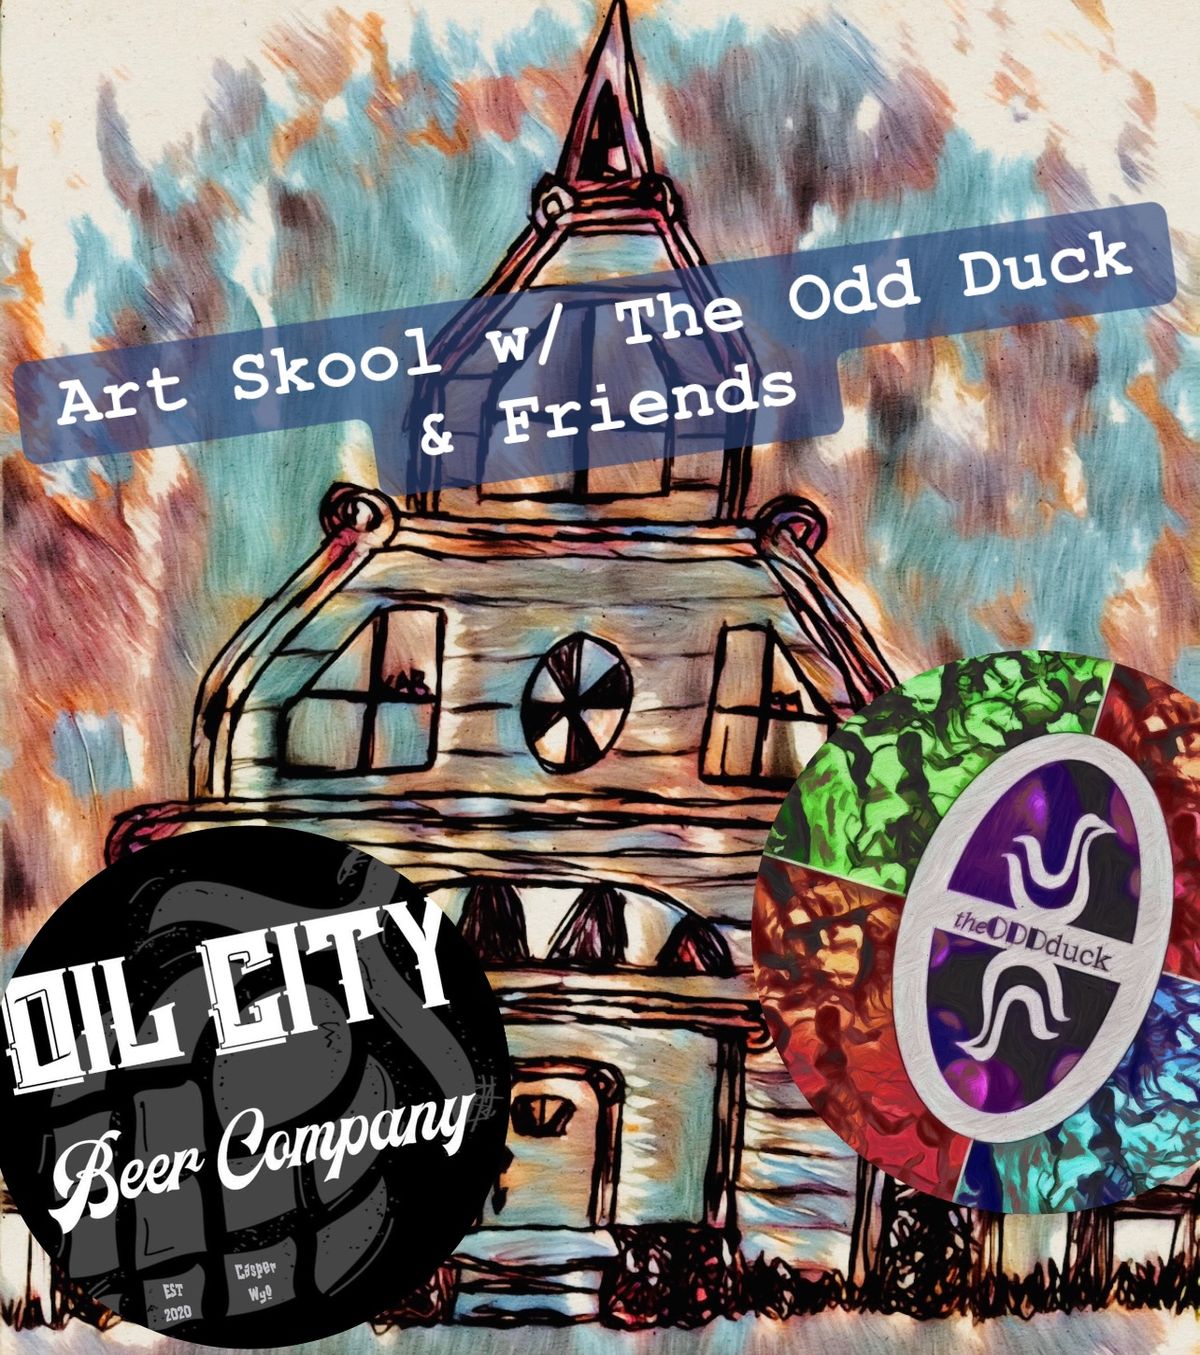 Art Skool w\/ The Odd Duck & Friends @ Oil City Beer Company ? June 23 12-5PM